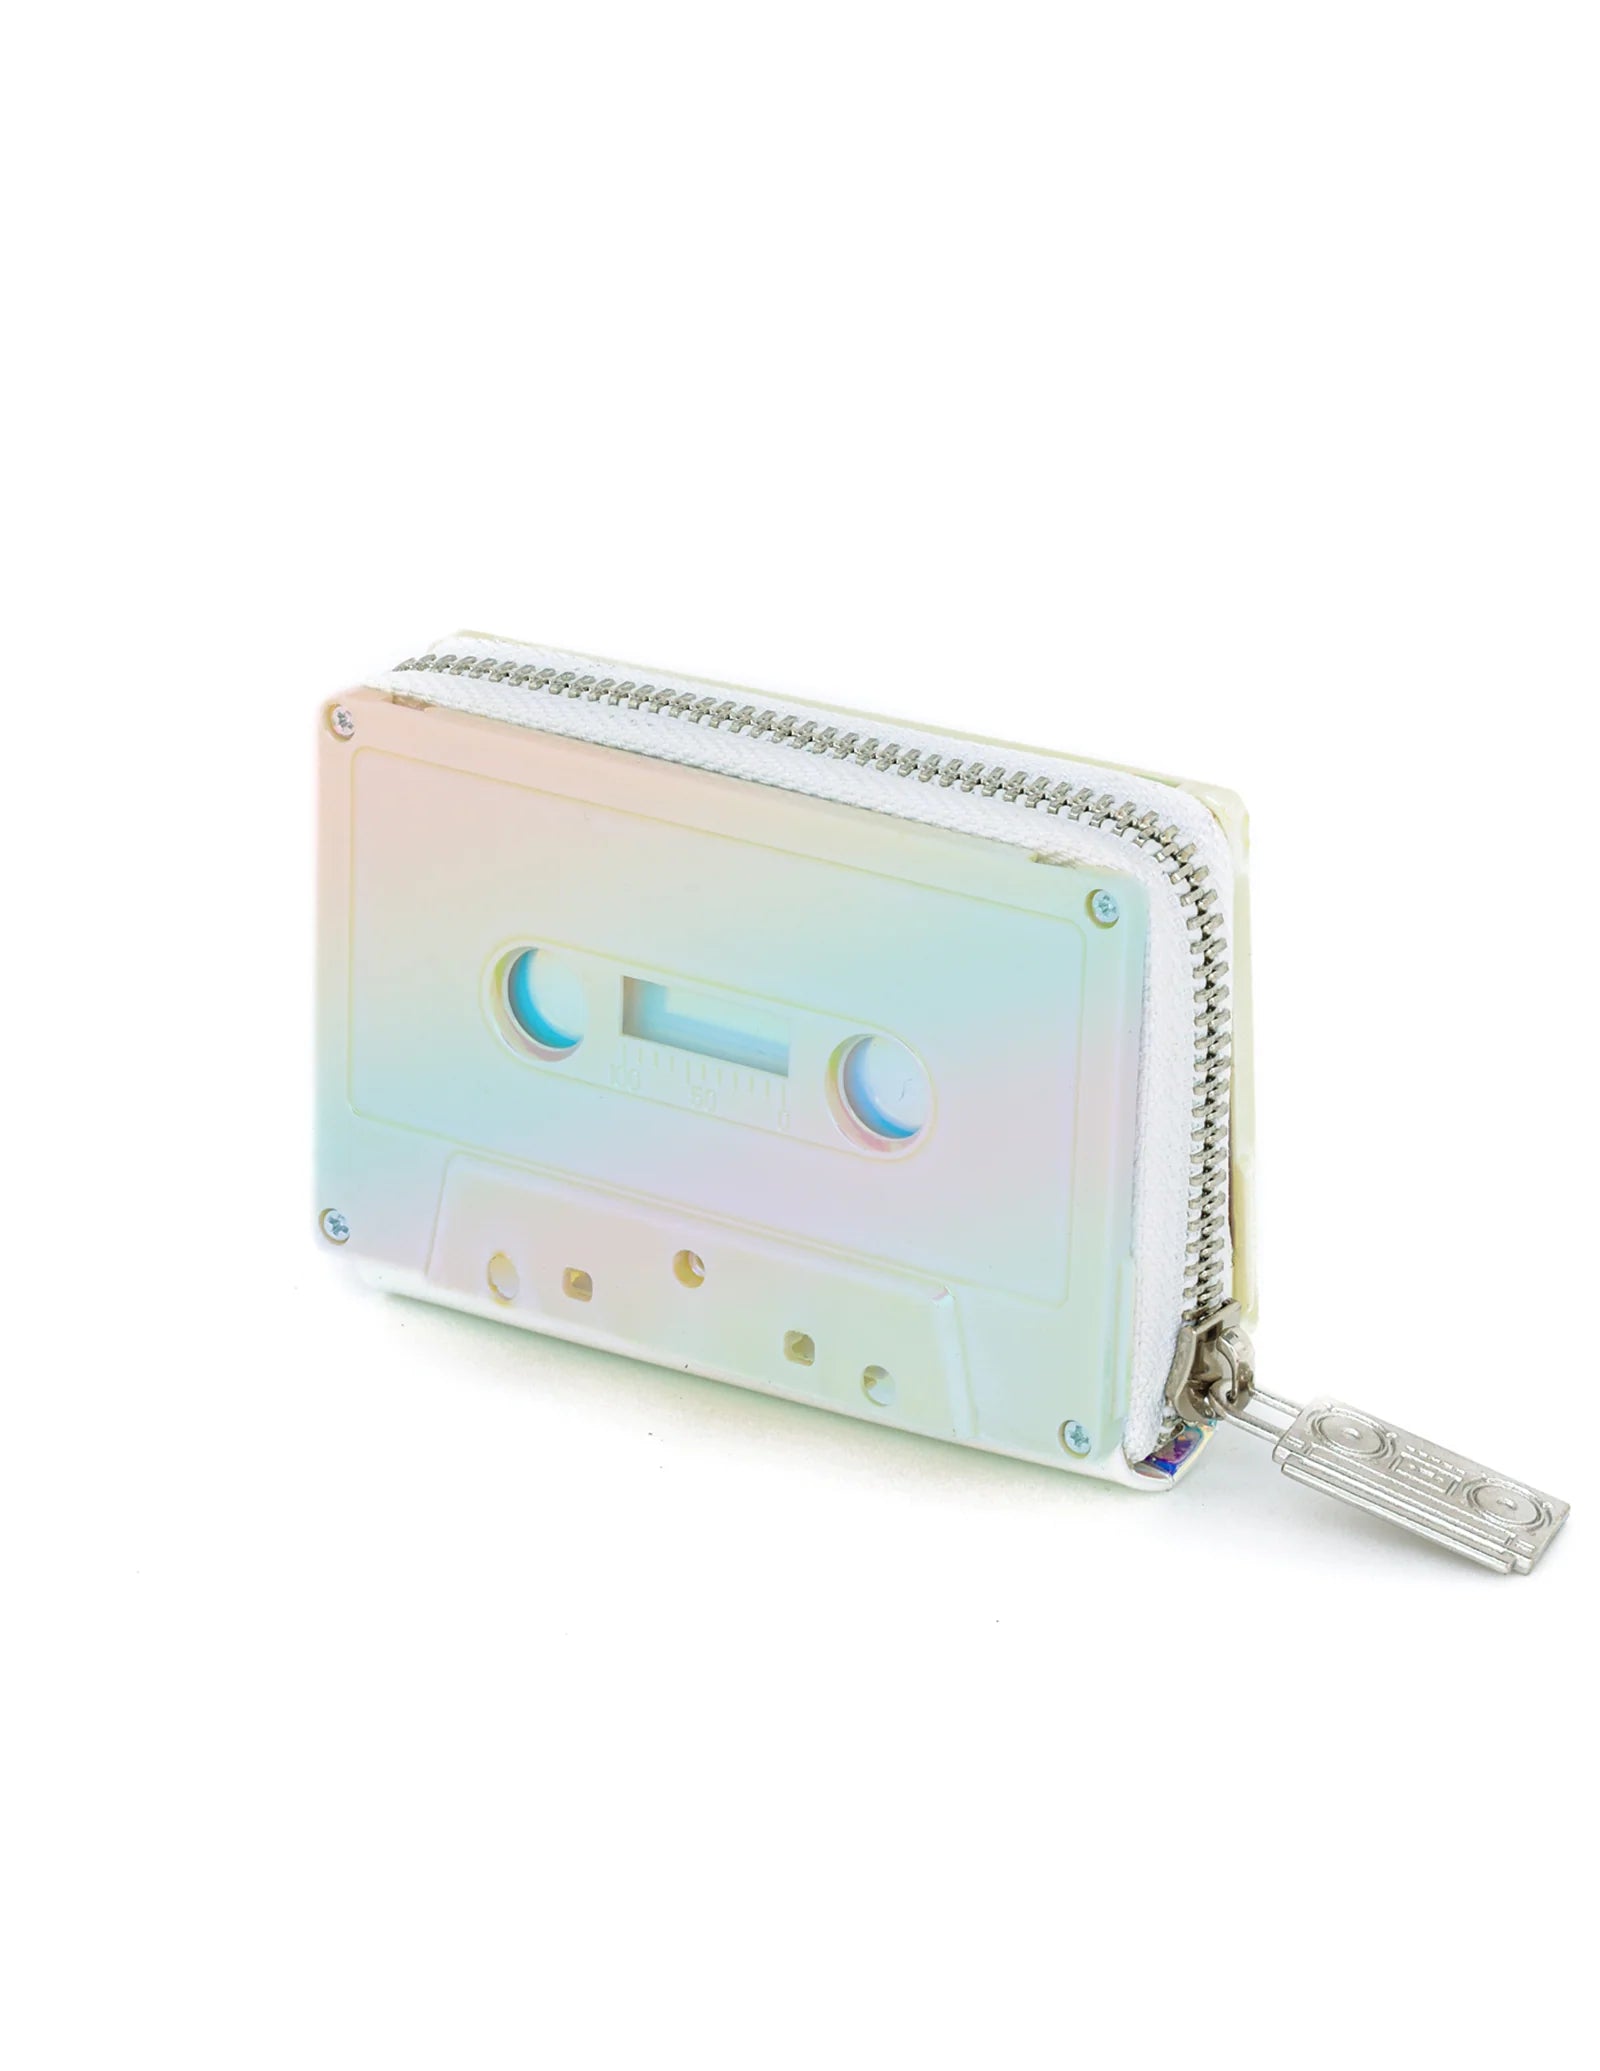 Retro Cassette Tape Wallet